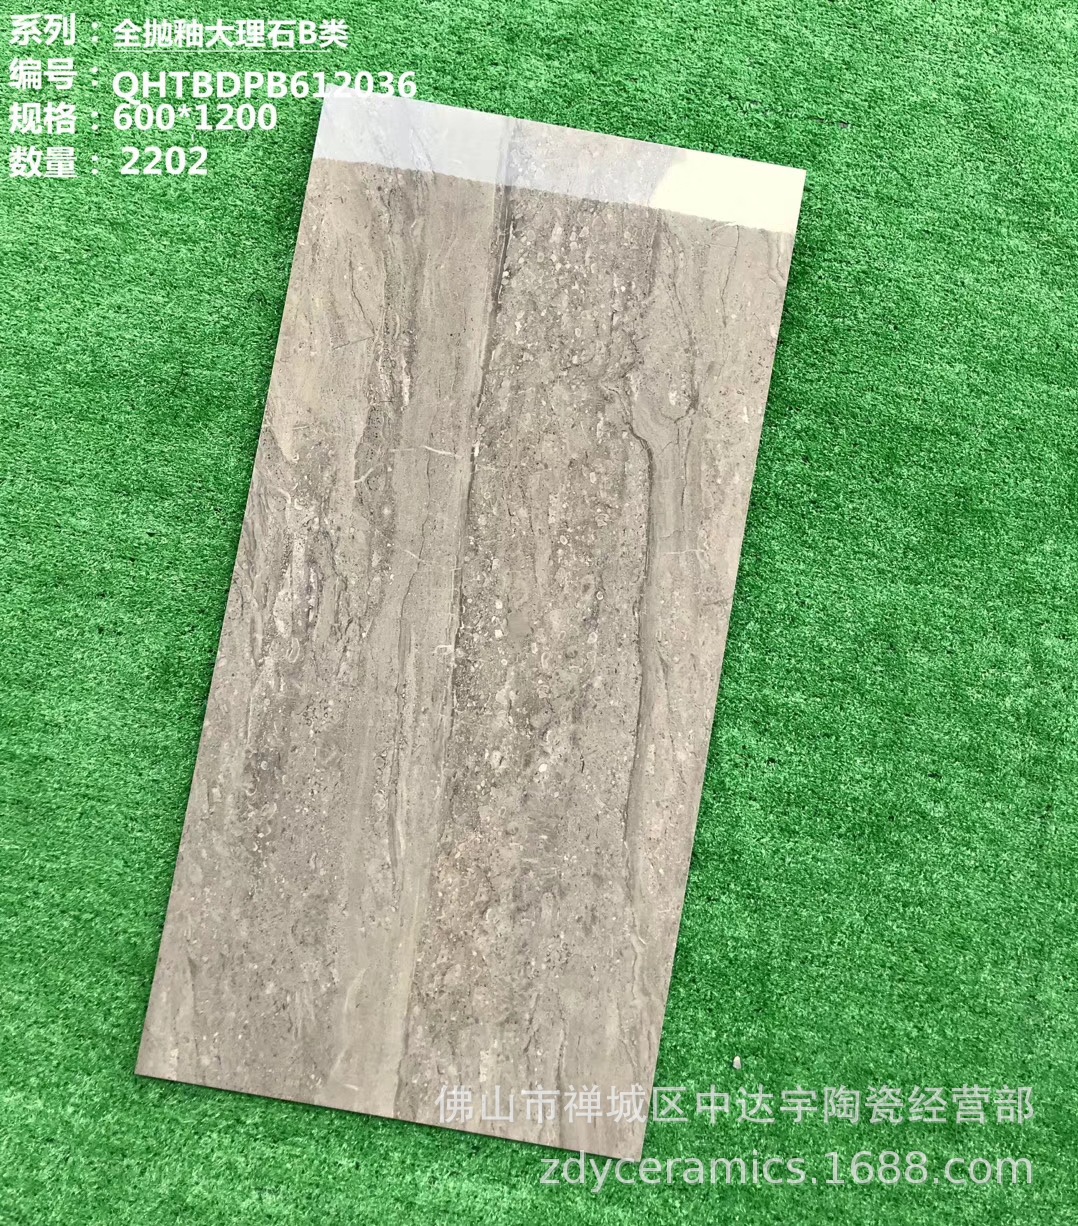 FS全抛釉大理石瓷砖600X1200MM QHTBDPA612033-B客厅卫生间地板砖示例图17